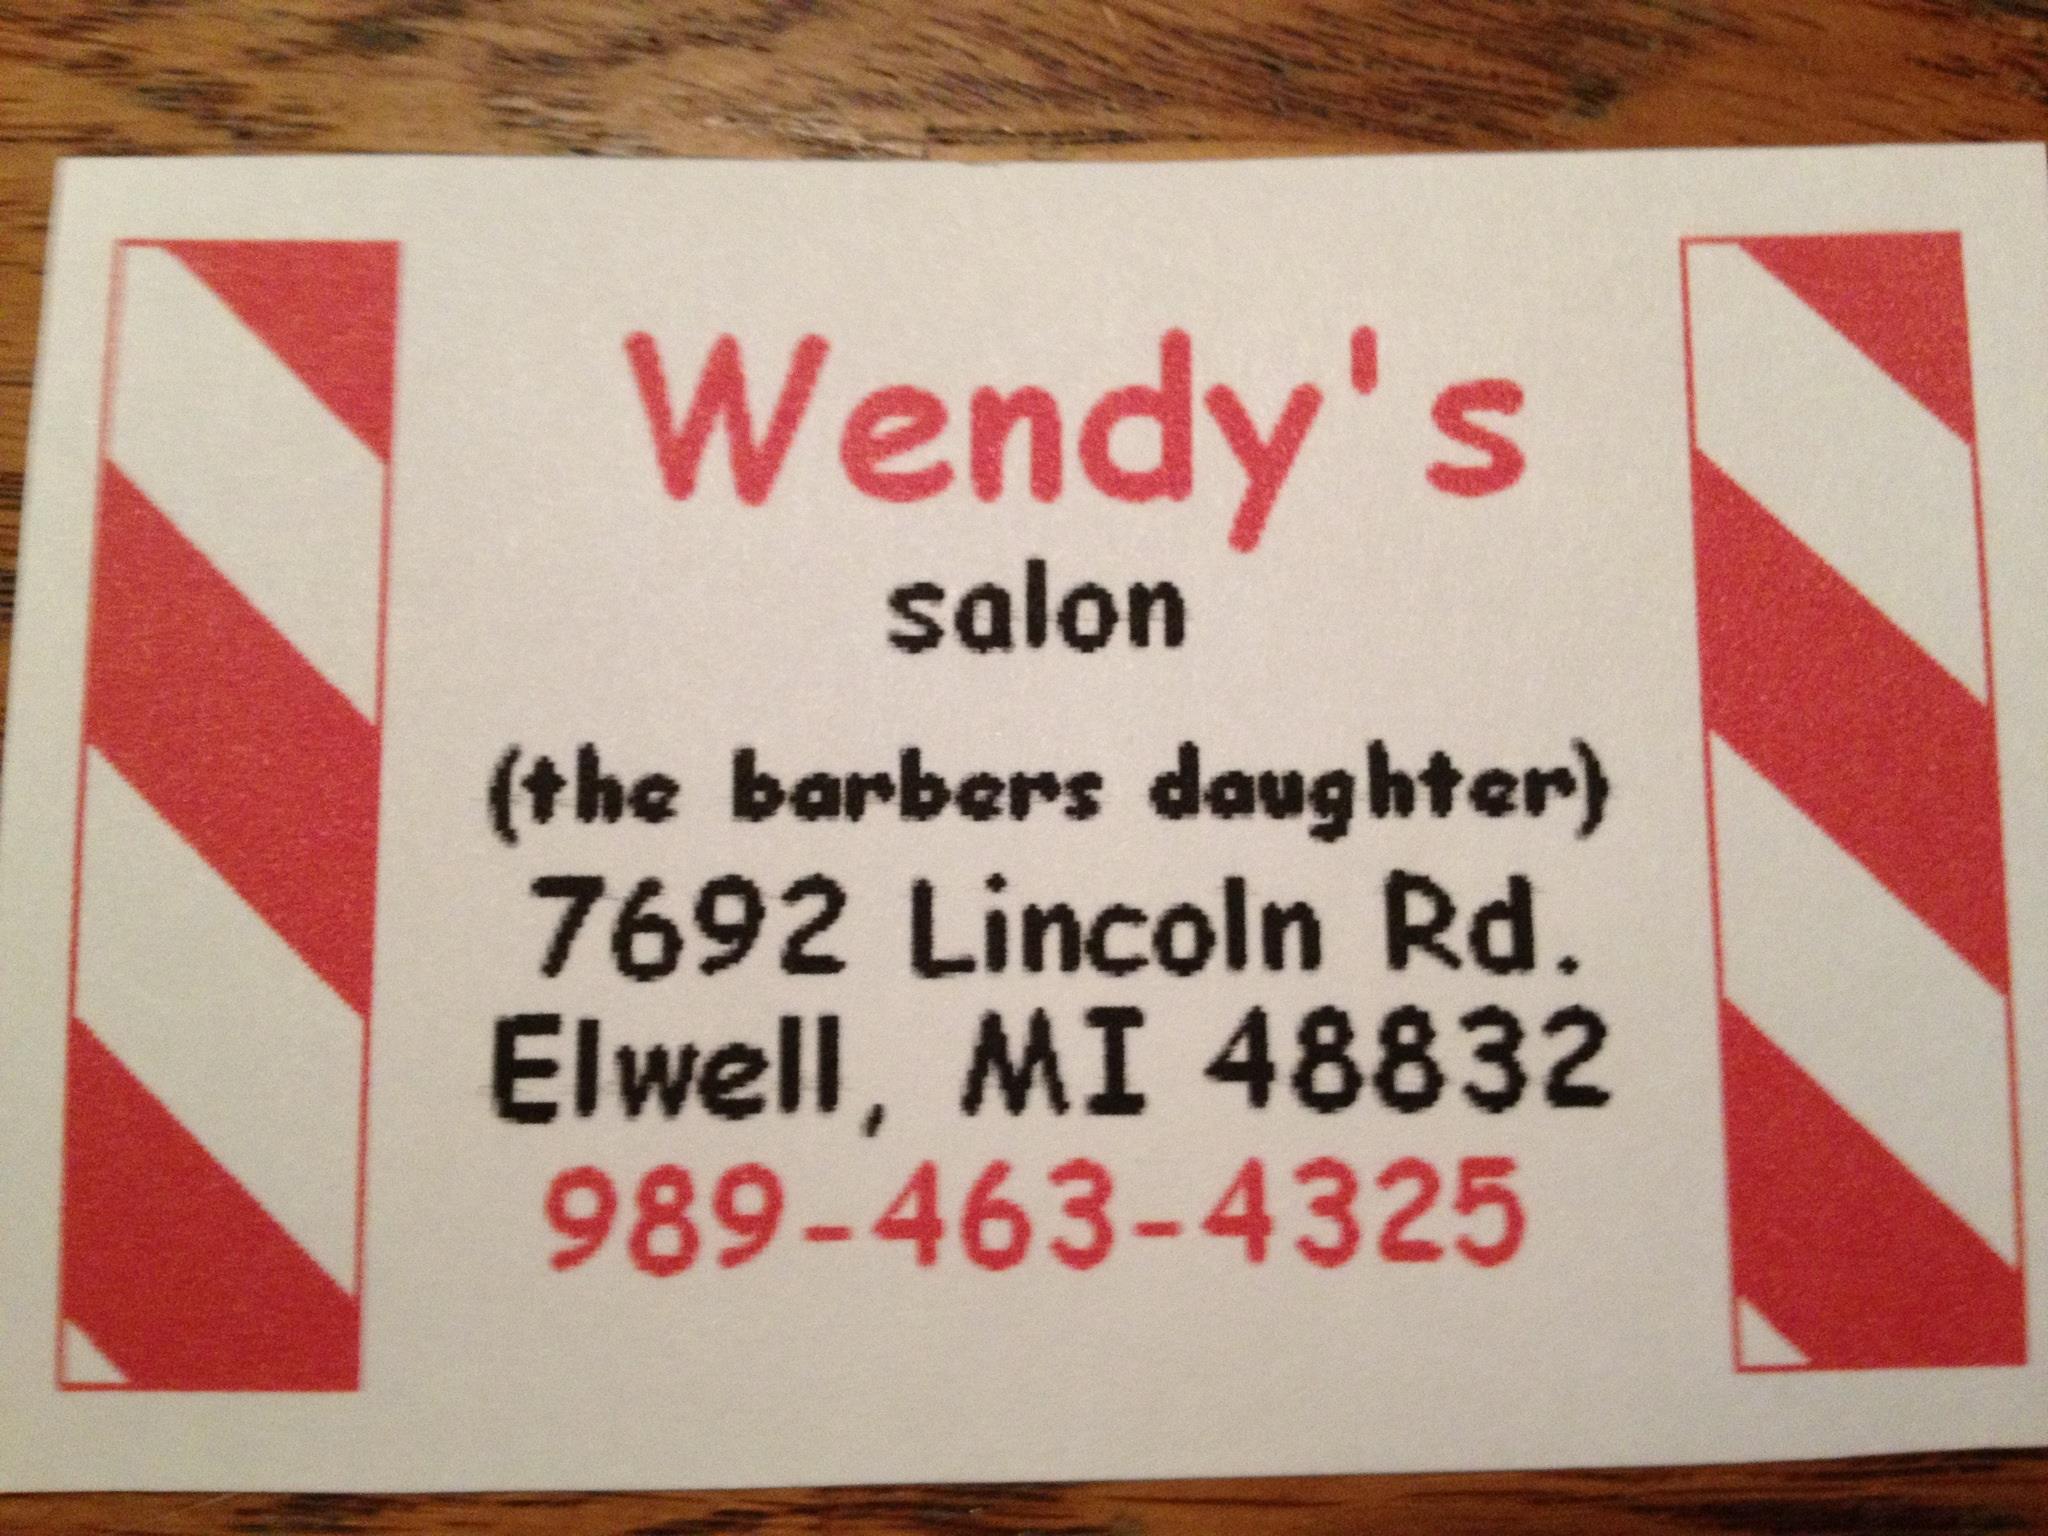 Wendy's Salon 7692 W Lincoln Rd, Elwell Michigan 48832